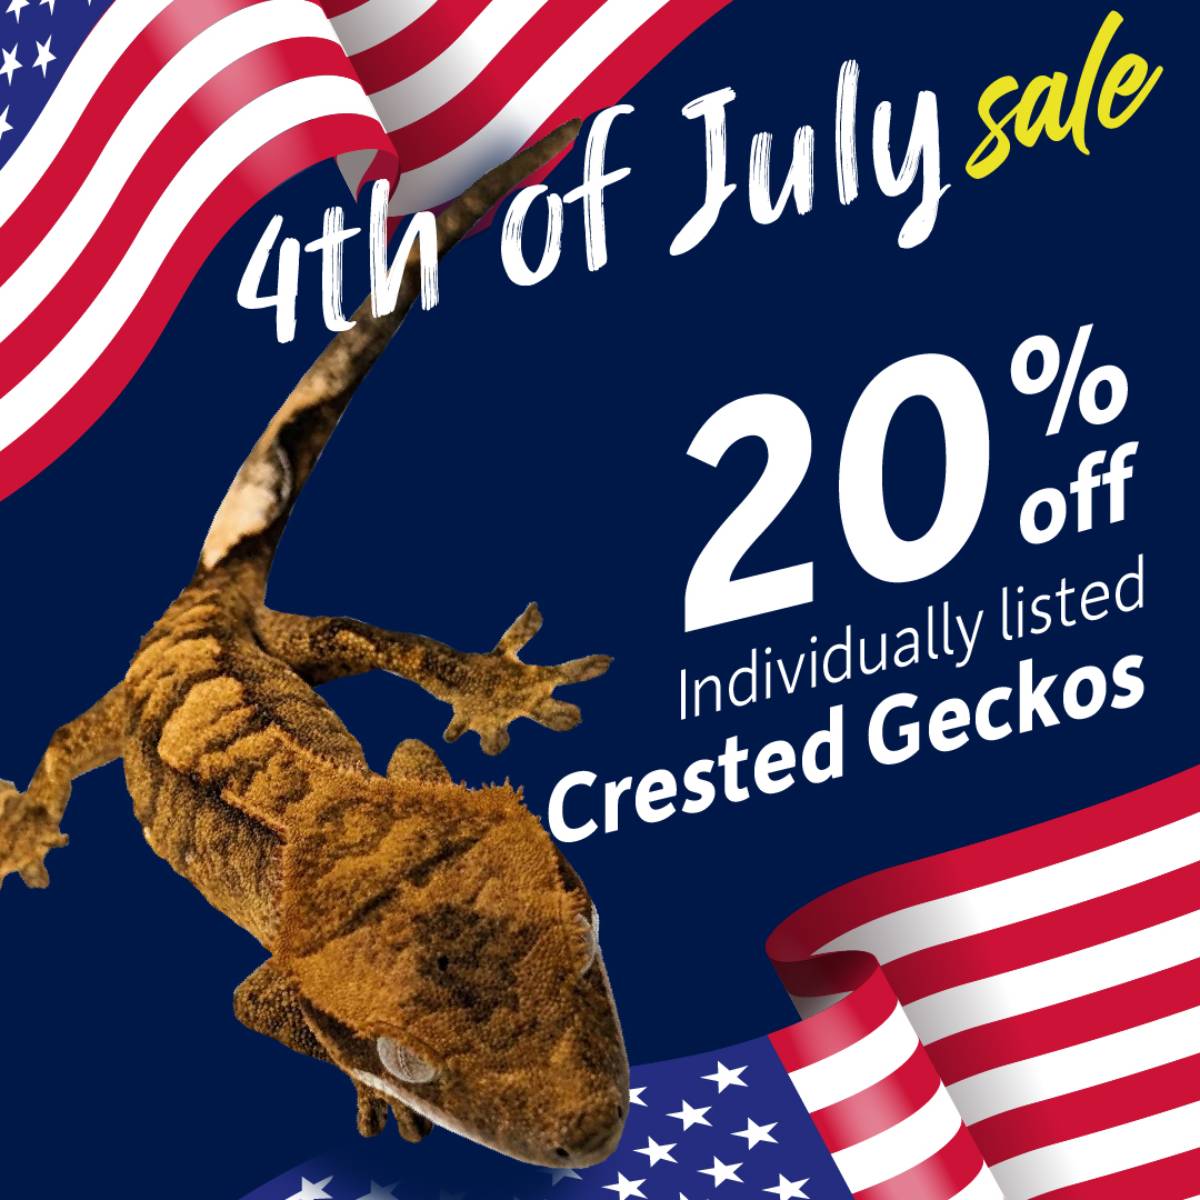 Save 20% off ILP crested geckos.